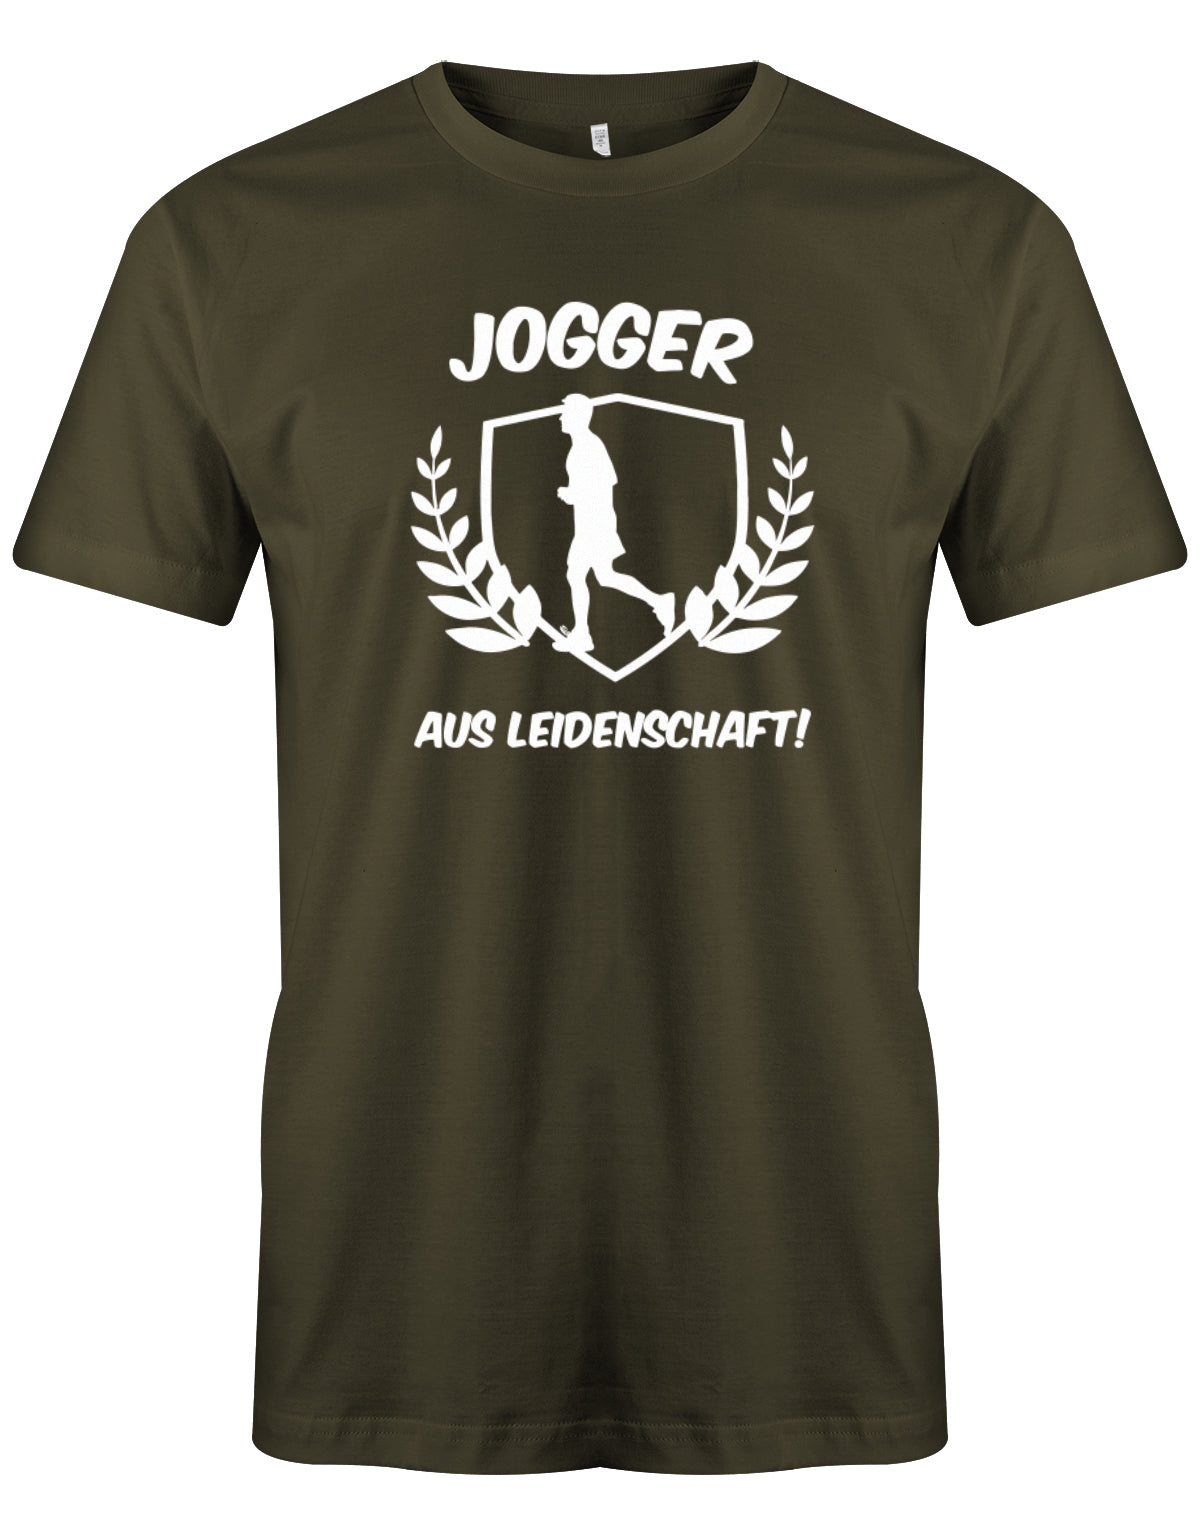 herren-shirt-armybmjPO1V4KqNNu